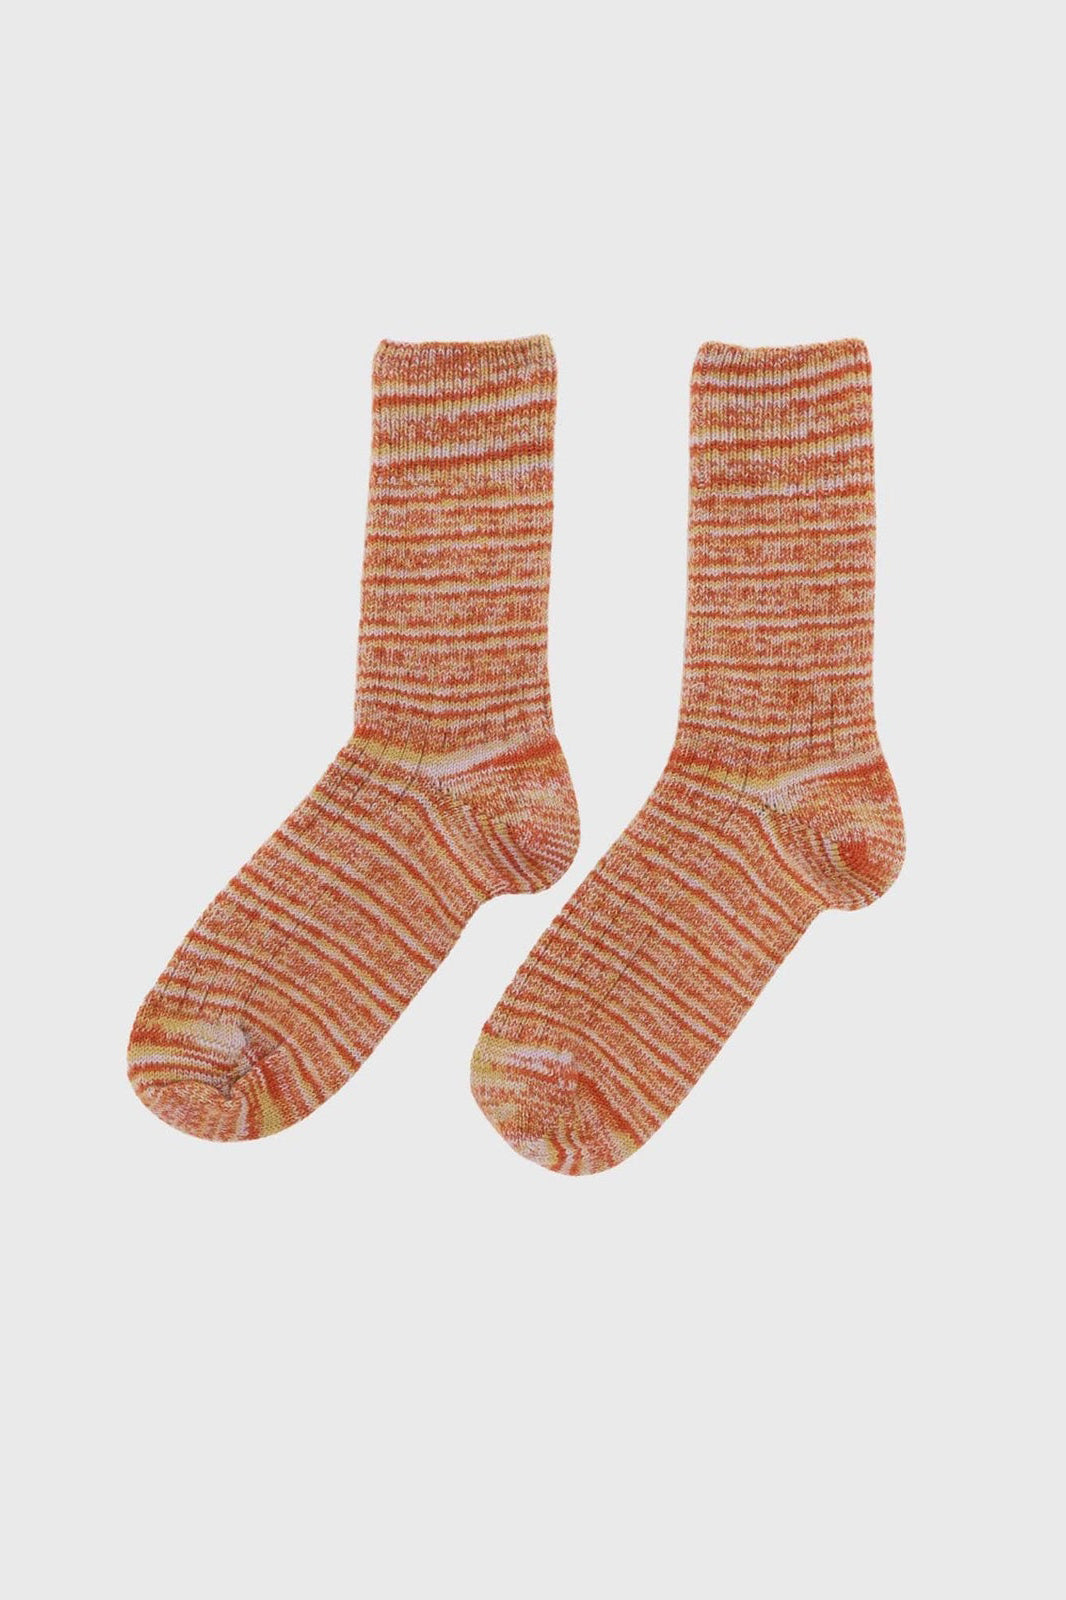 Twist Overankle Socks in Orange Multi Organic Cotton by Baserange